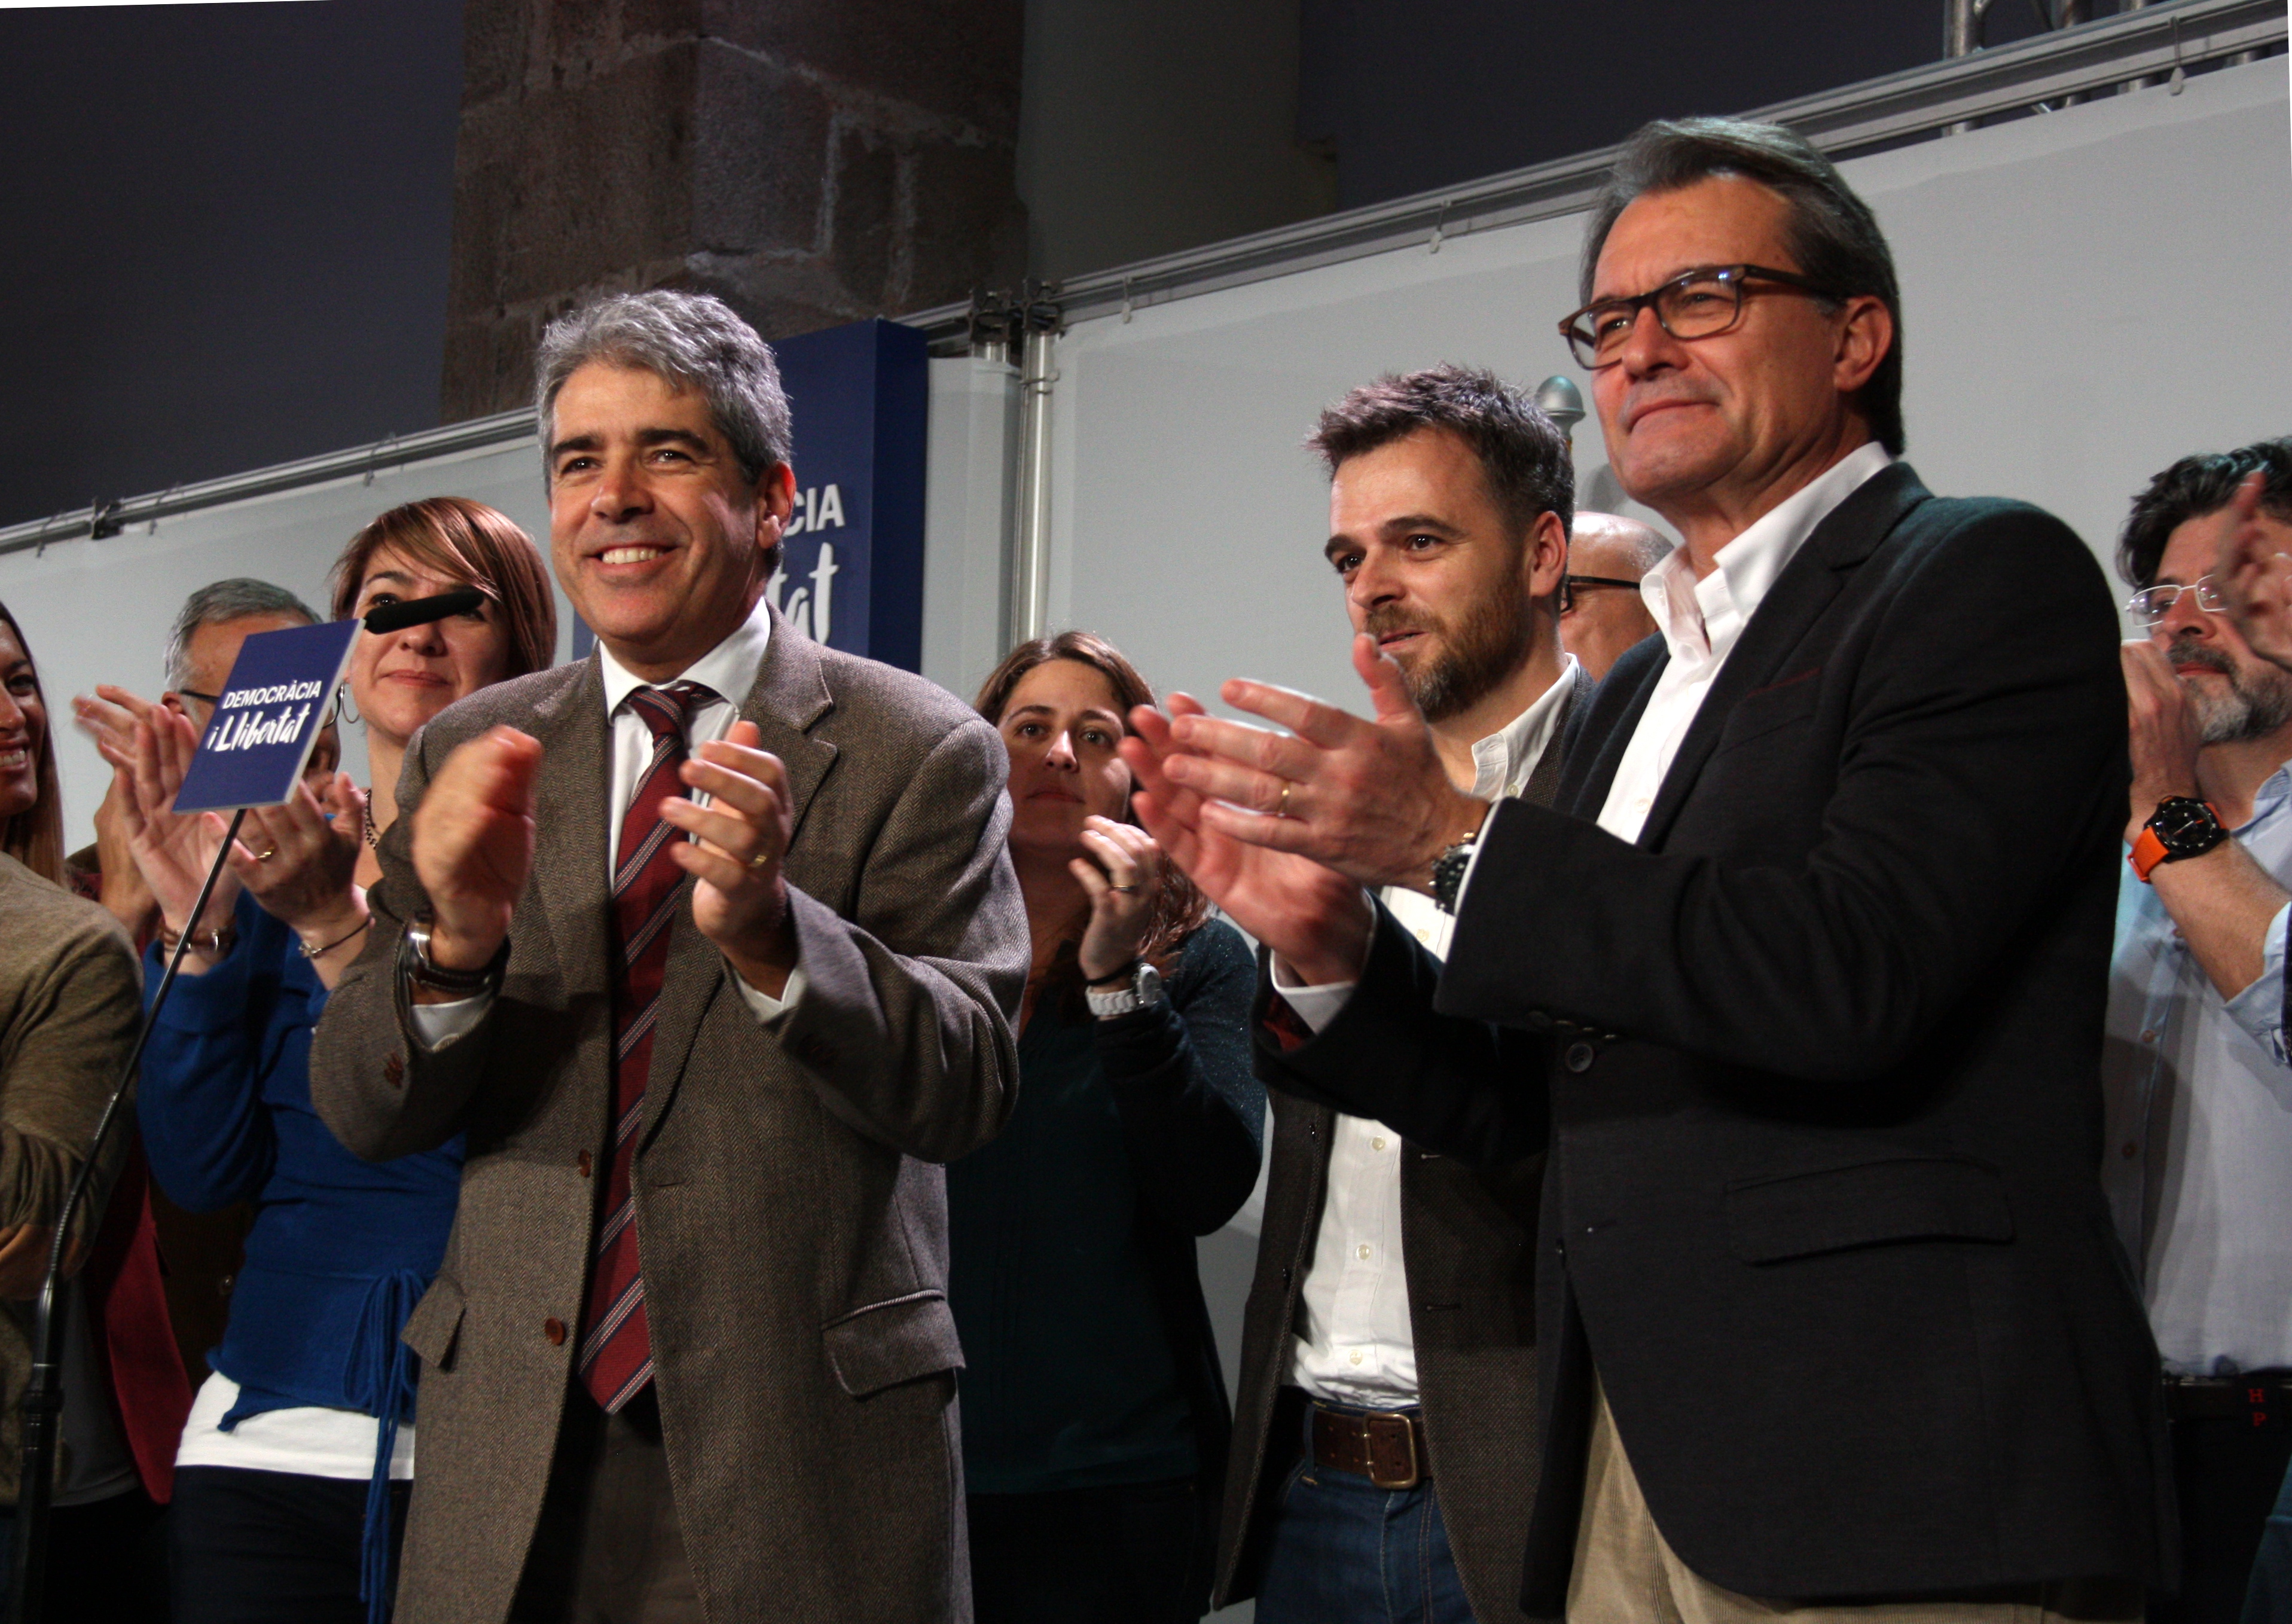 Image of Democràcia i Llibertat's candidate for Barcelona, Francesc Homs and current Catalan President, Artur Mas (by ACN)